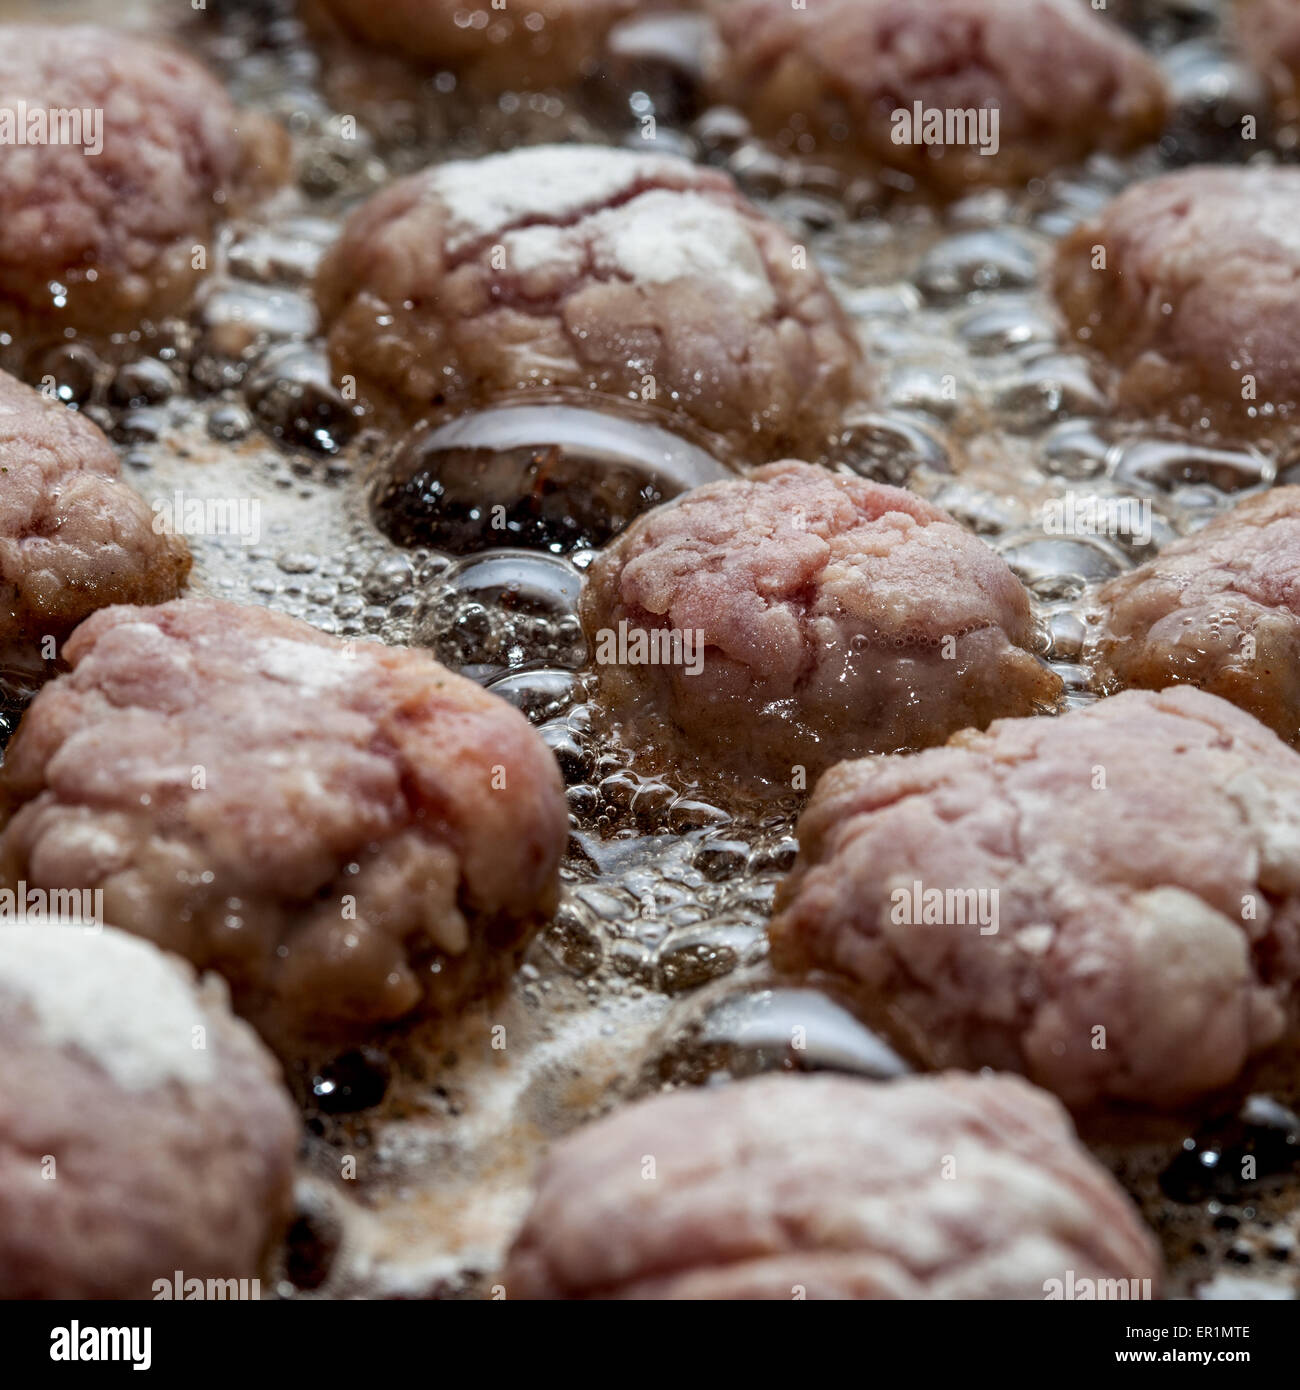 meatballs cooked Stock Photo